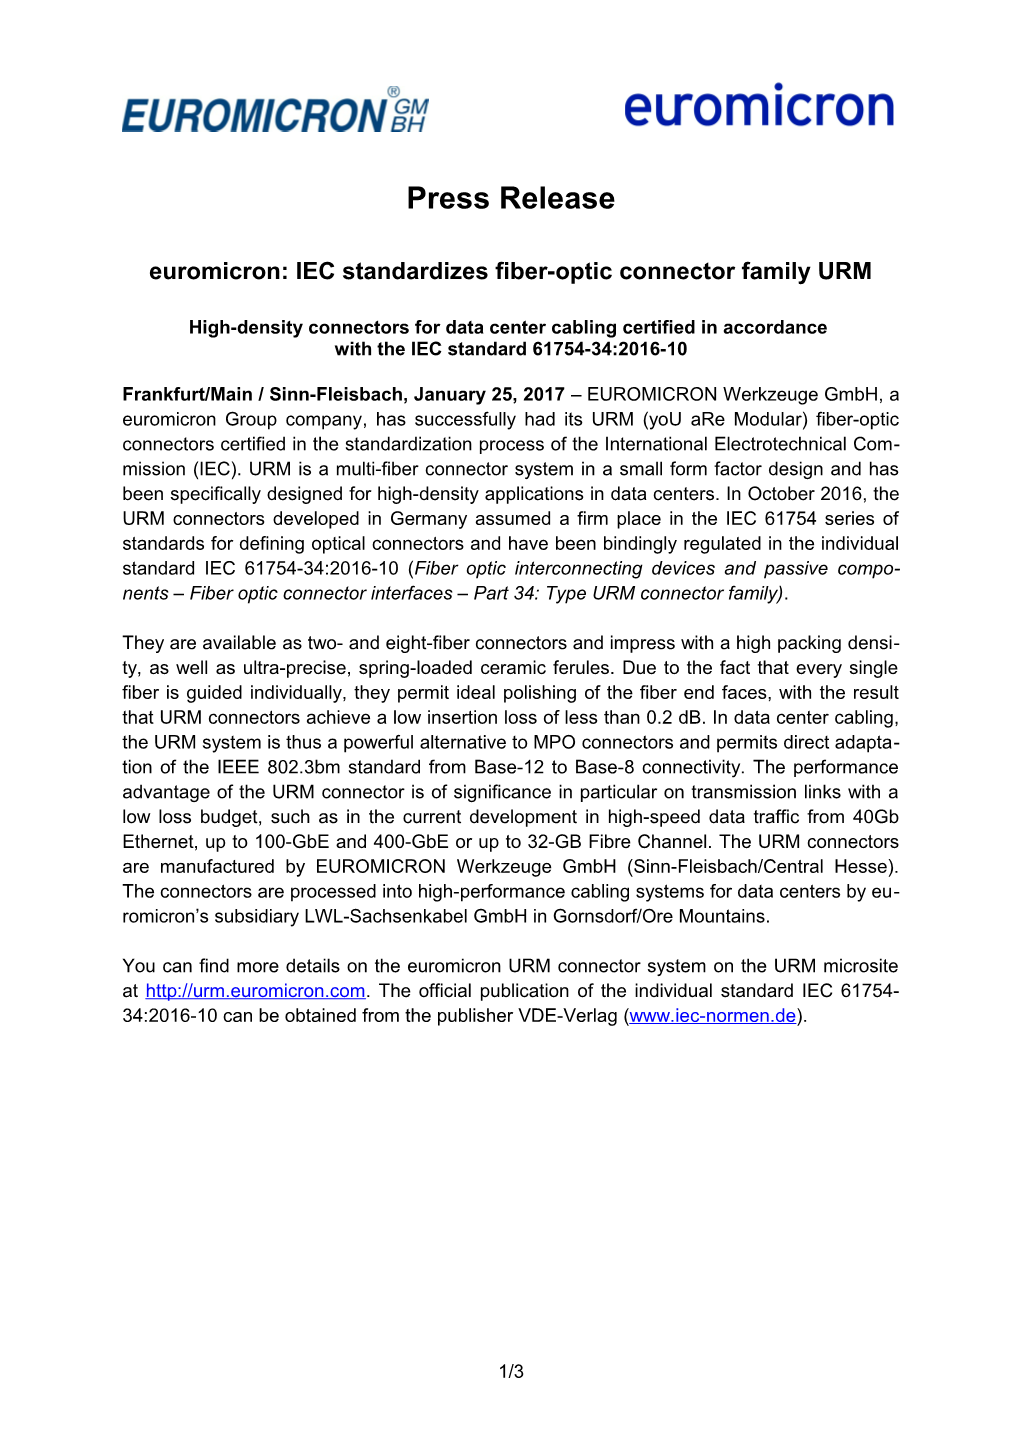 Euromicron: IEC Standardizes Fiber-Optic Connector Family URM